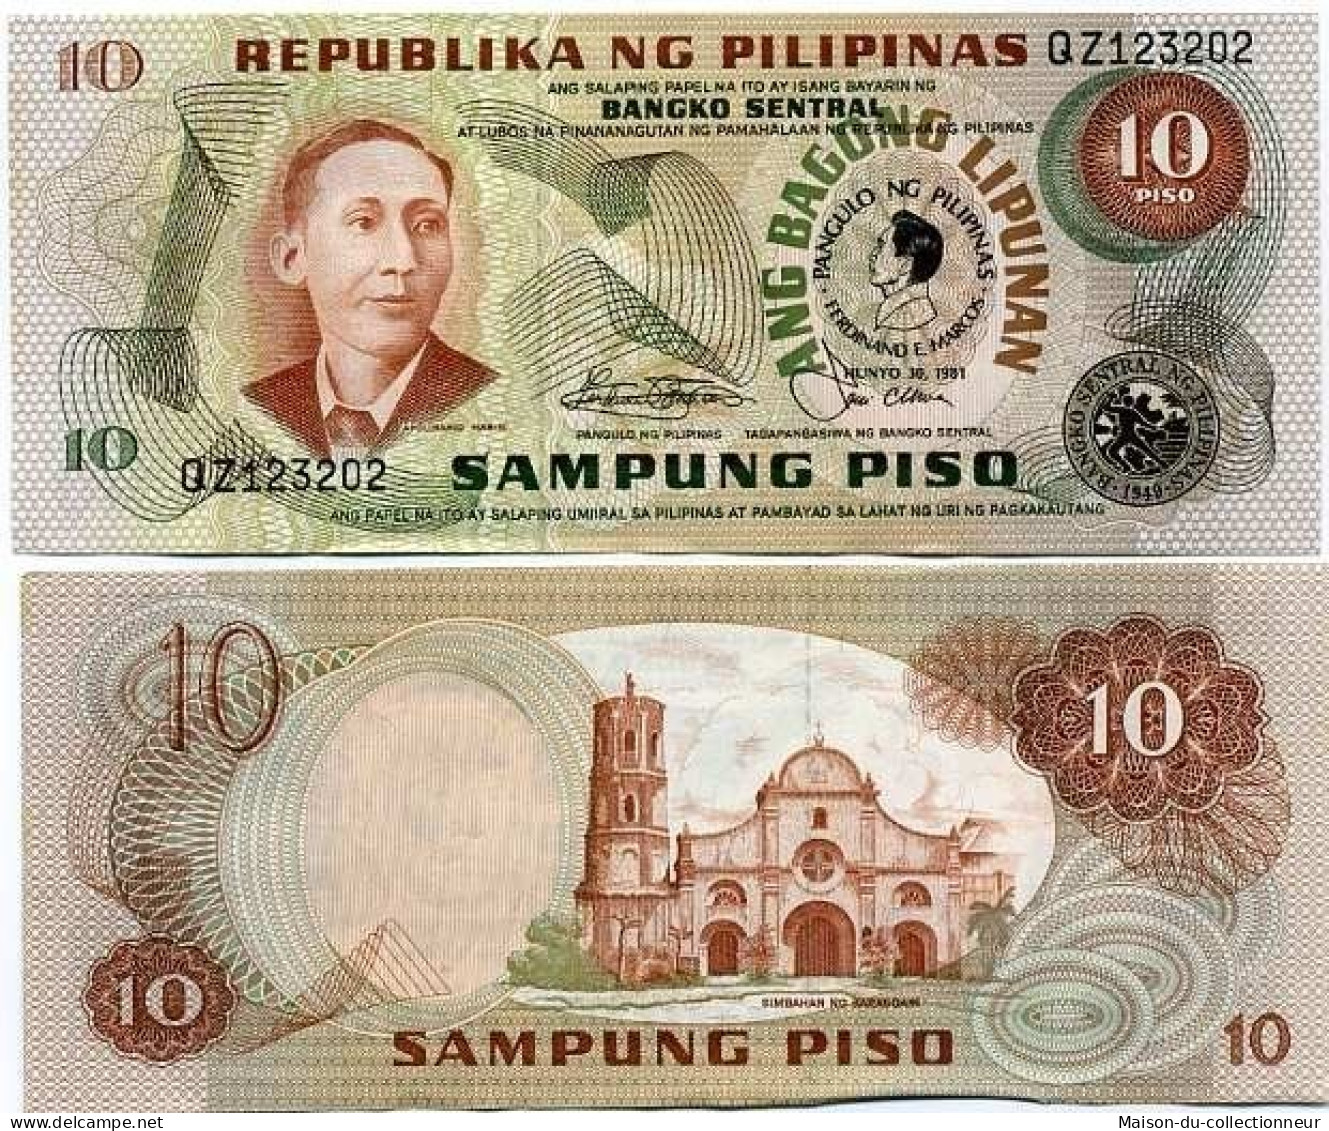 Billet De Collection Philippines Pk N° 167 - 10 Pesos - Philippines